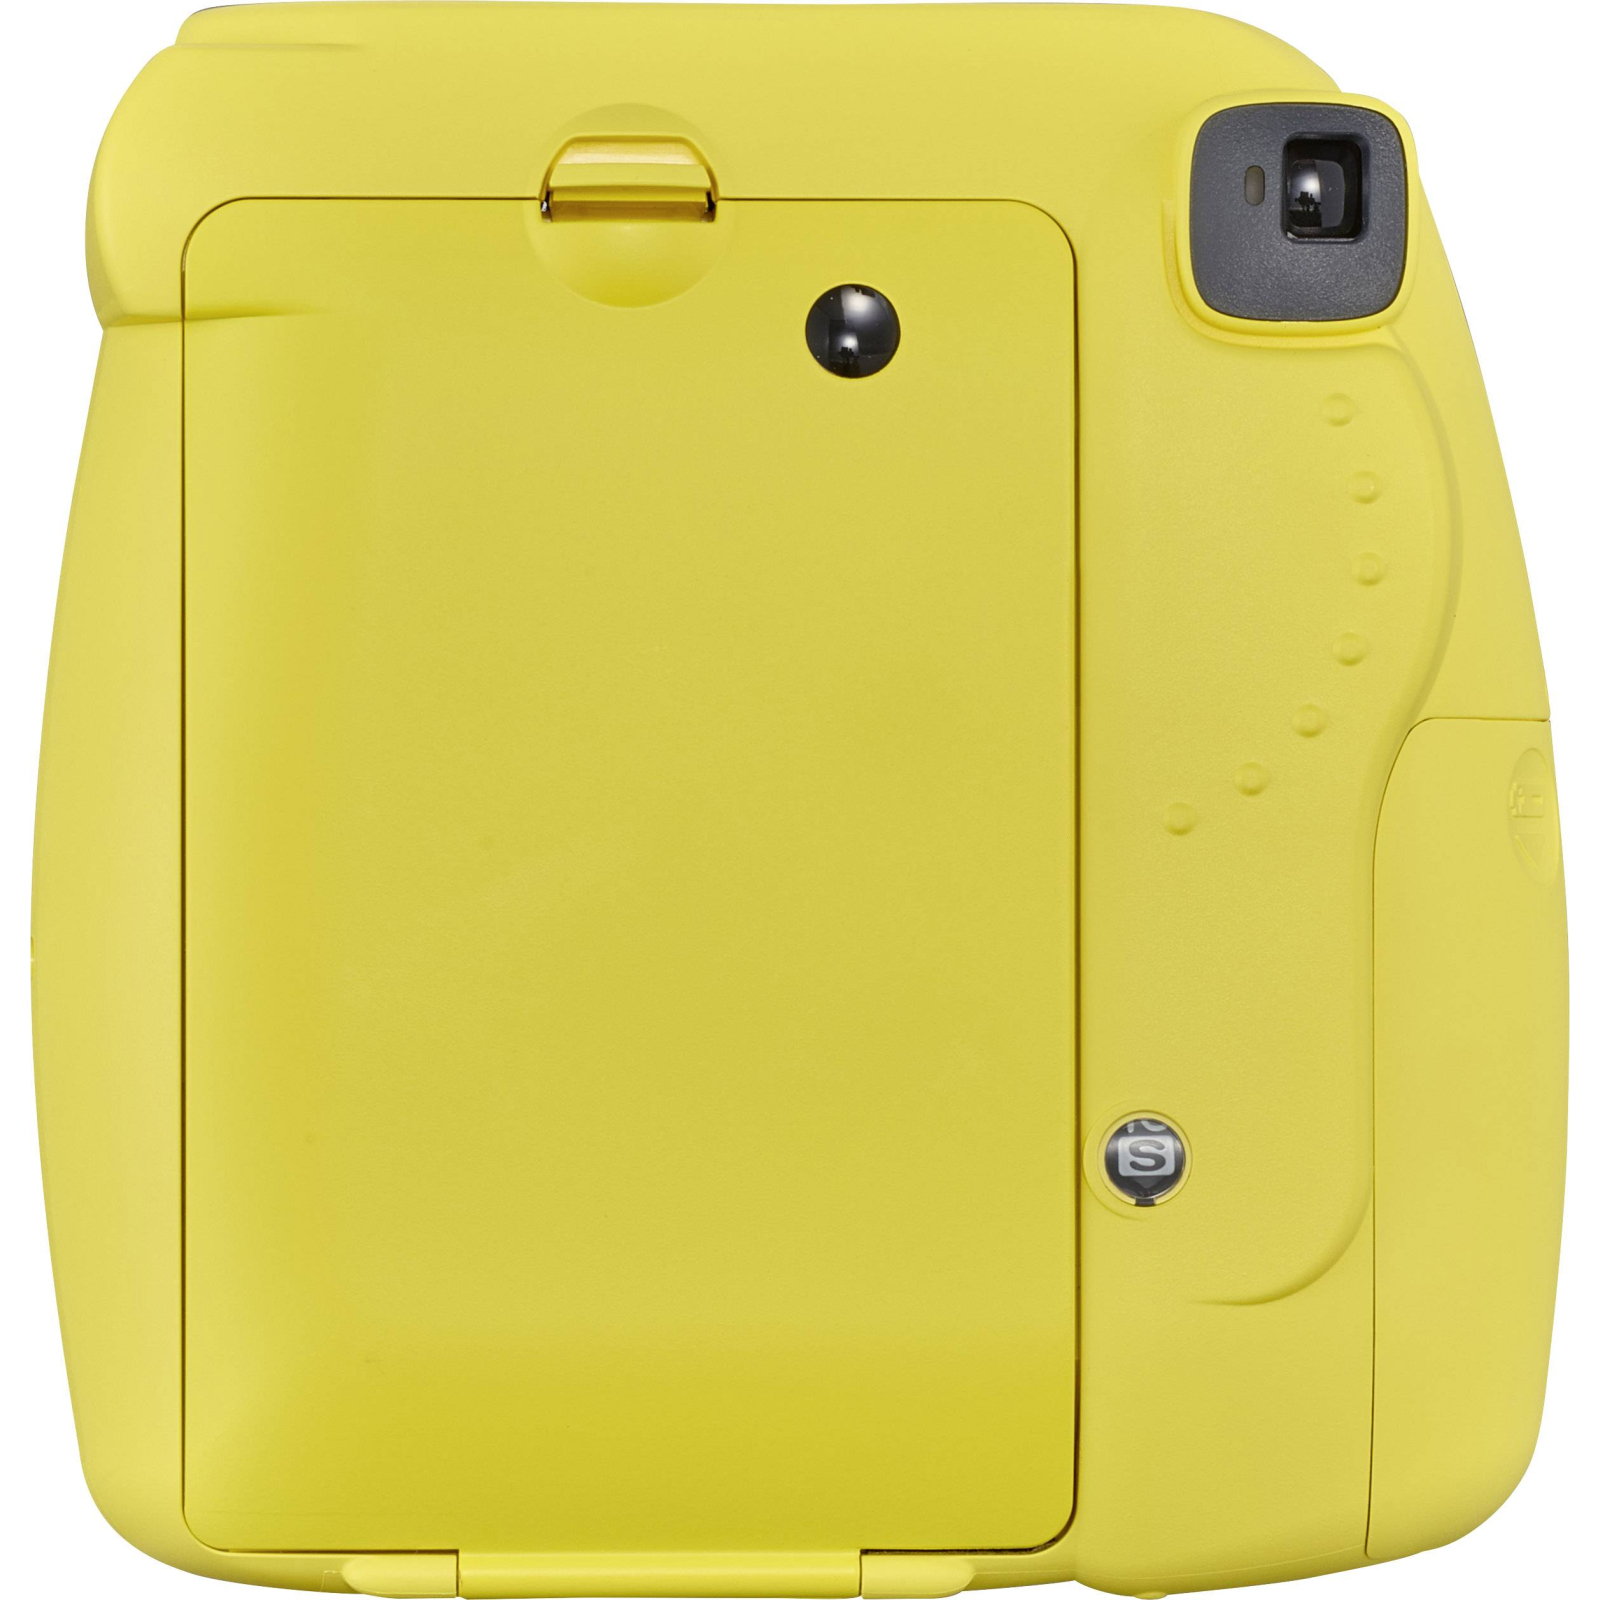 Камера моментальной печати Fujifilm INSTAX Mini 9 Yellow (16632960) изображение 5